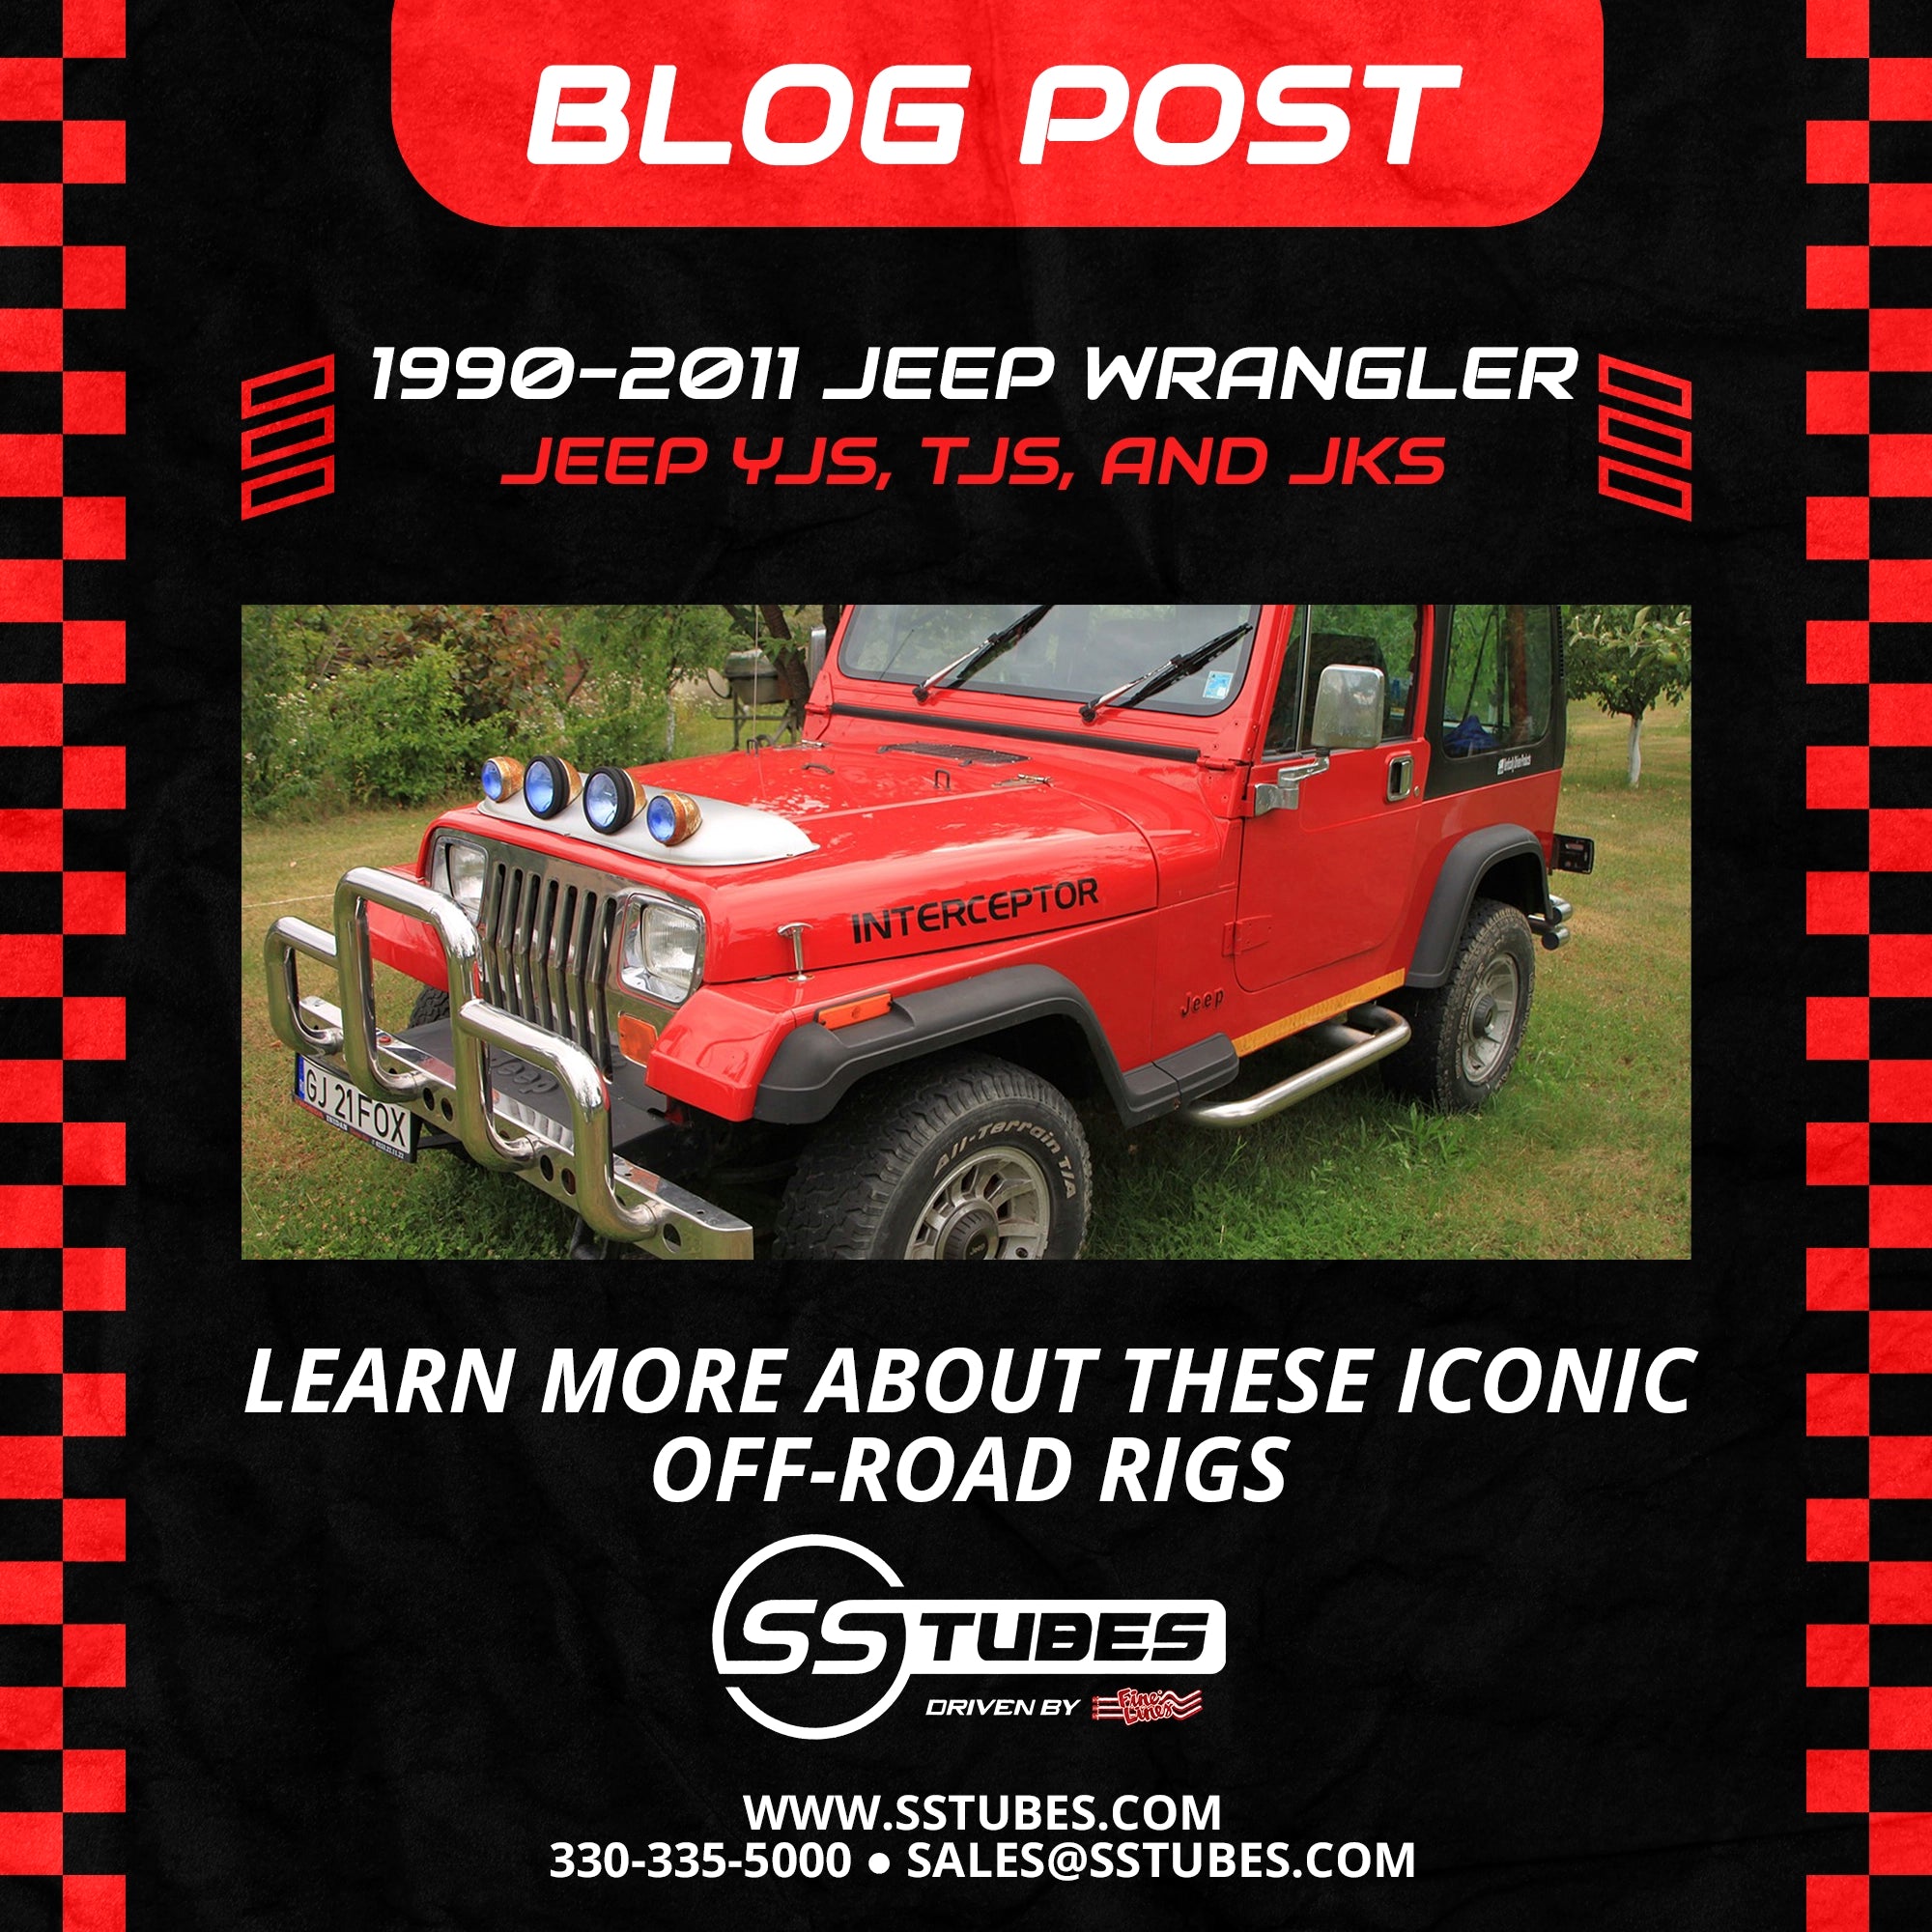 1994-2011 Jeep Wrangler Generations